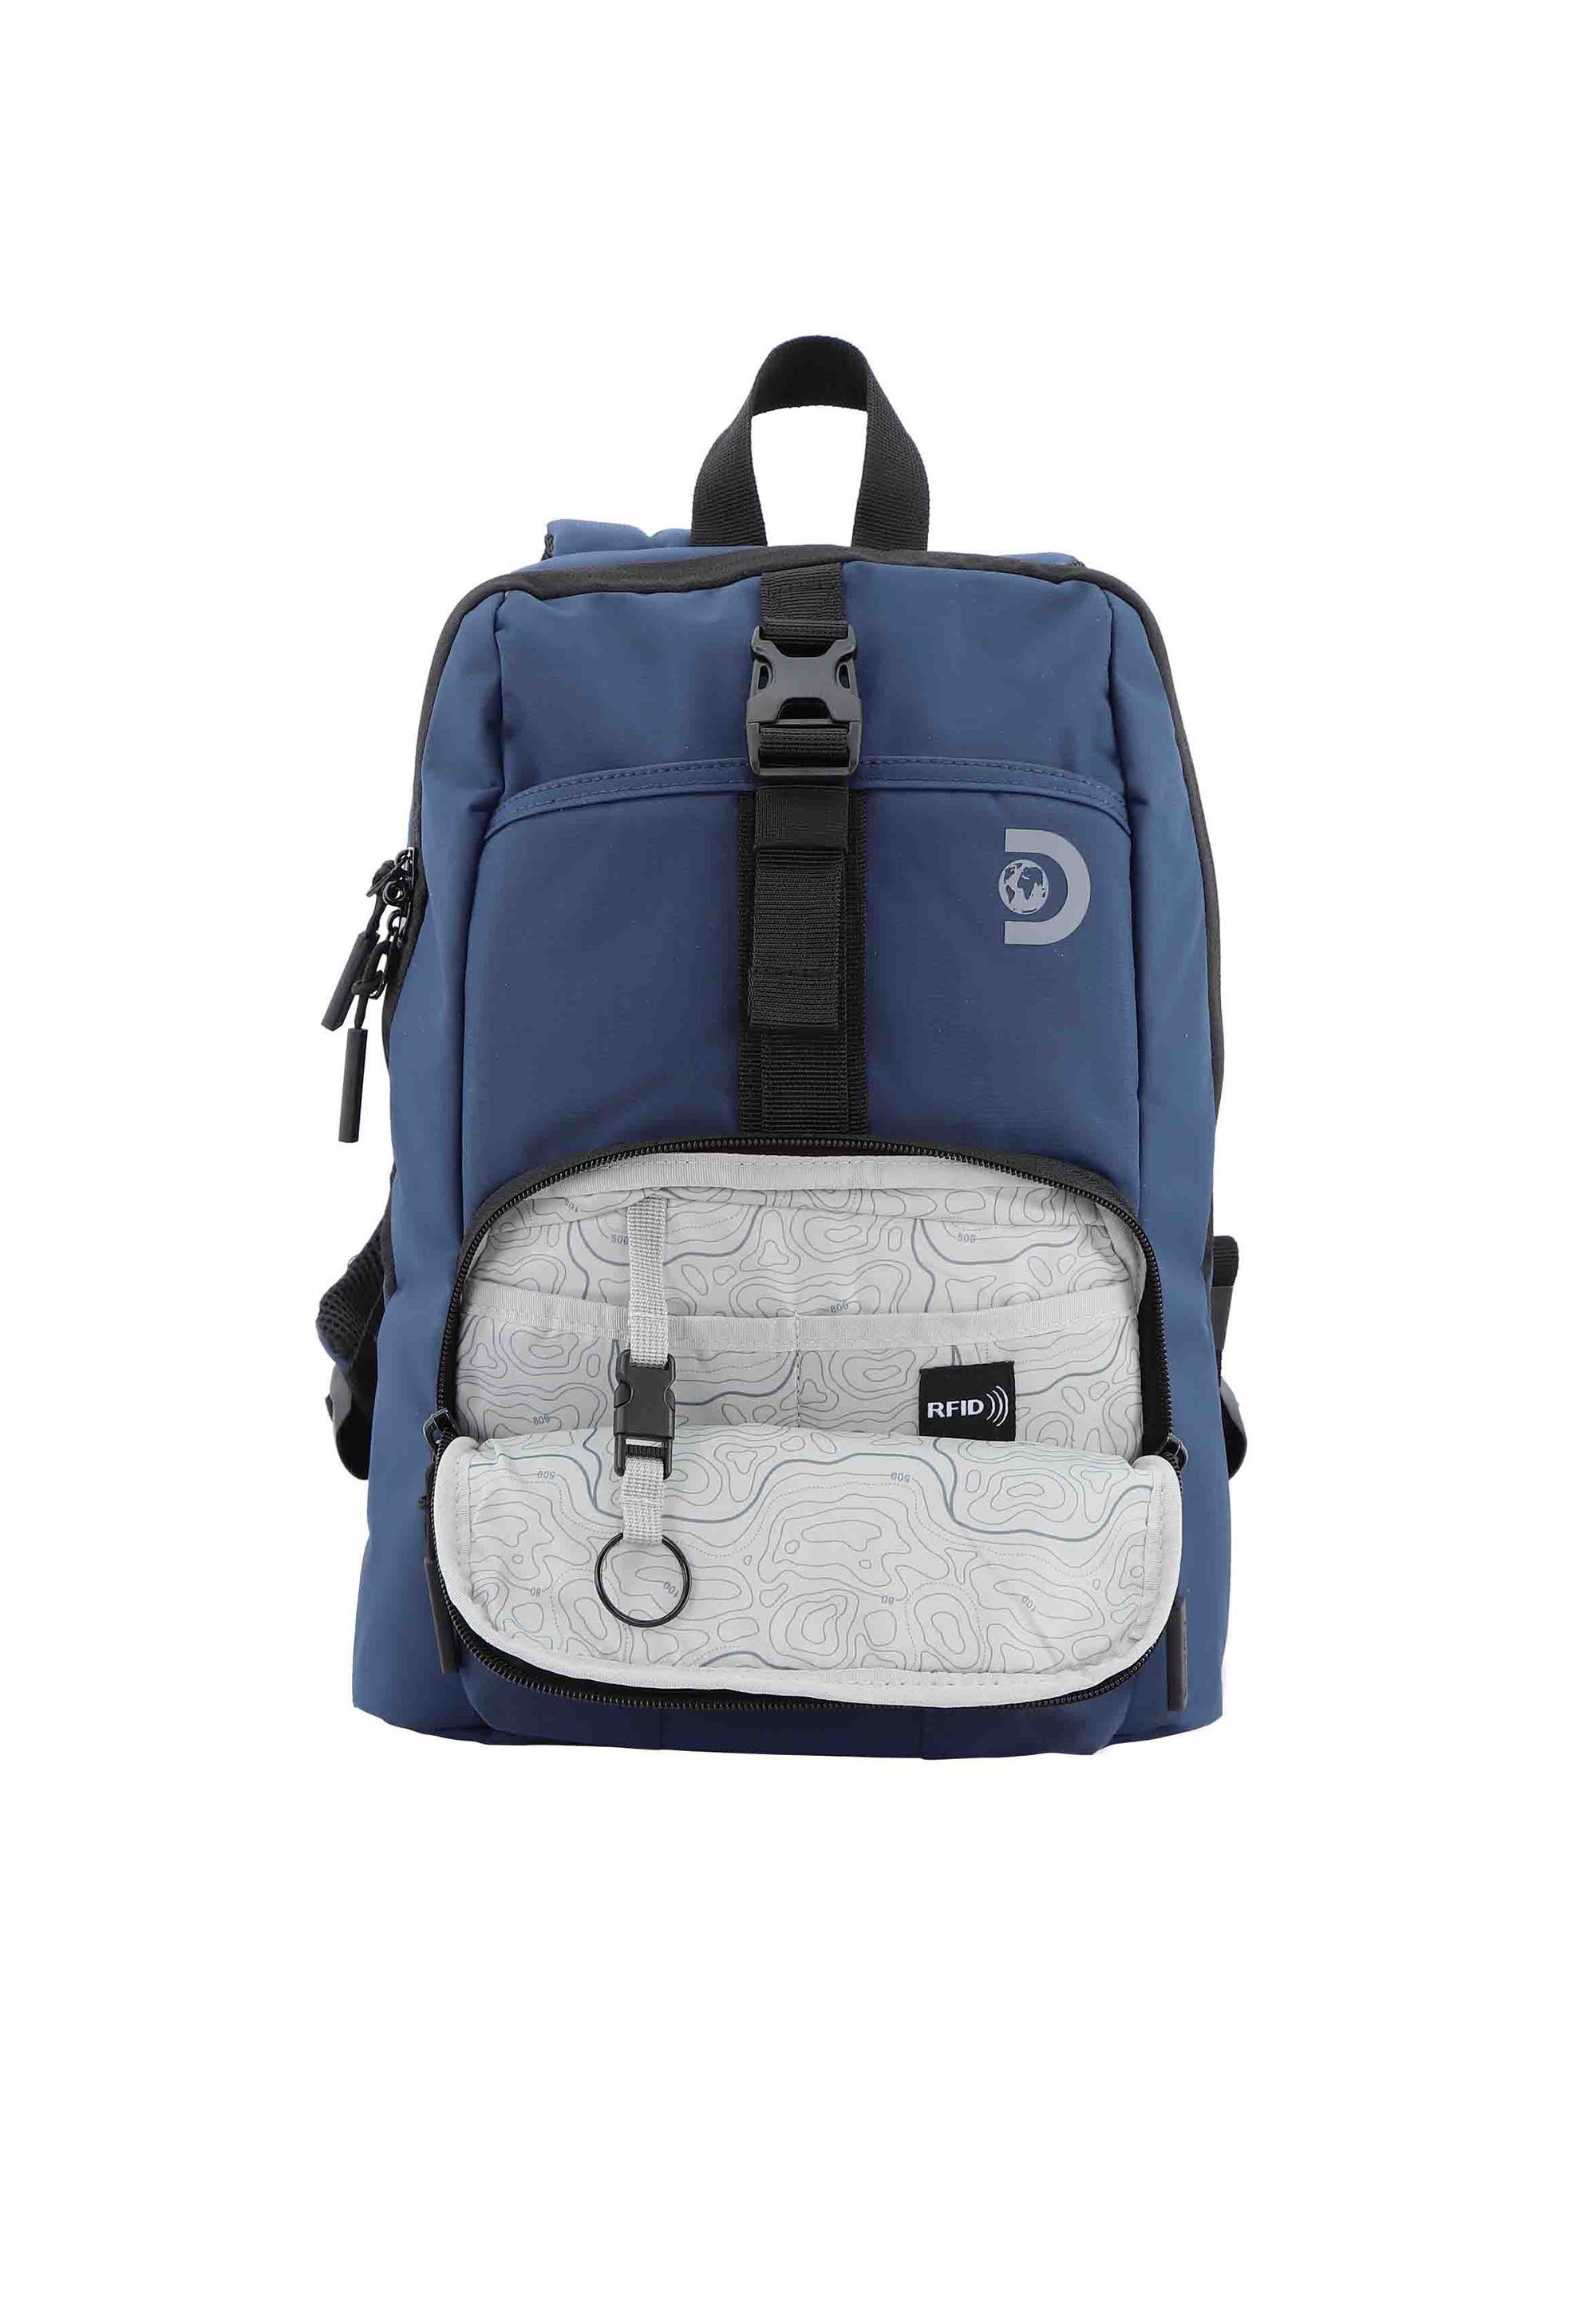 Discovery - Shield Rucksack / Laptop-Rucksack - 10L - Blau